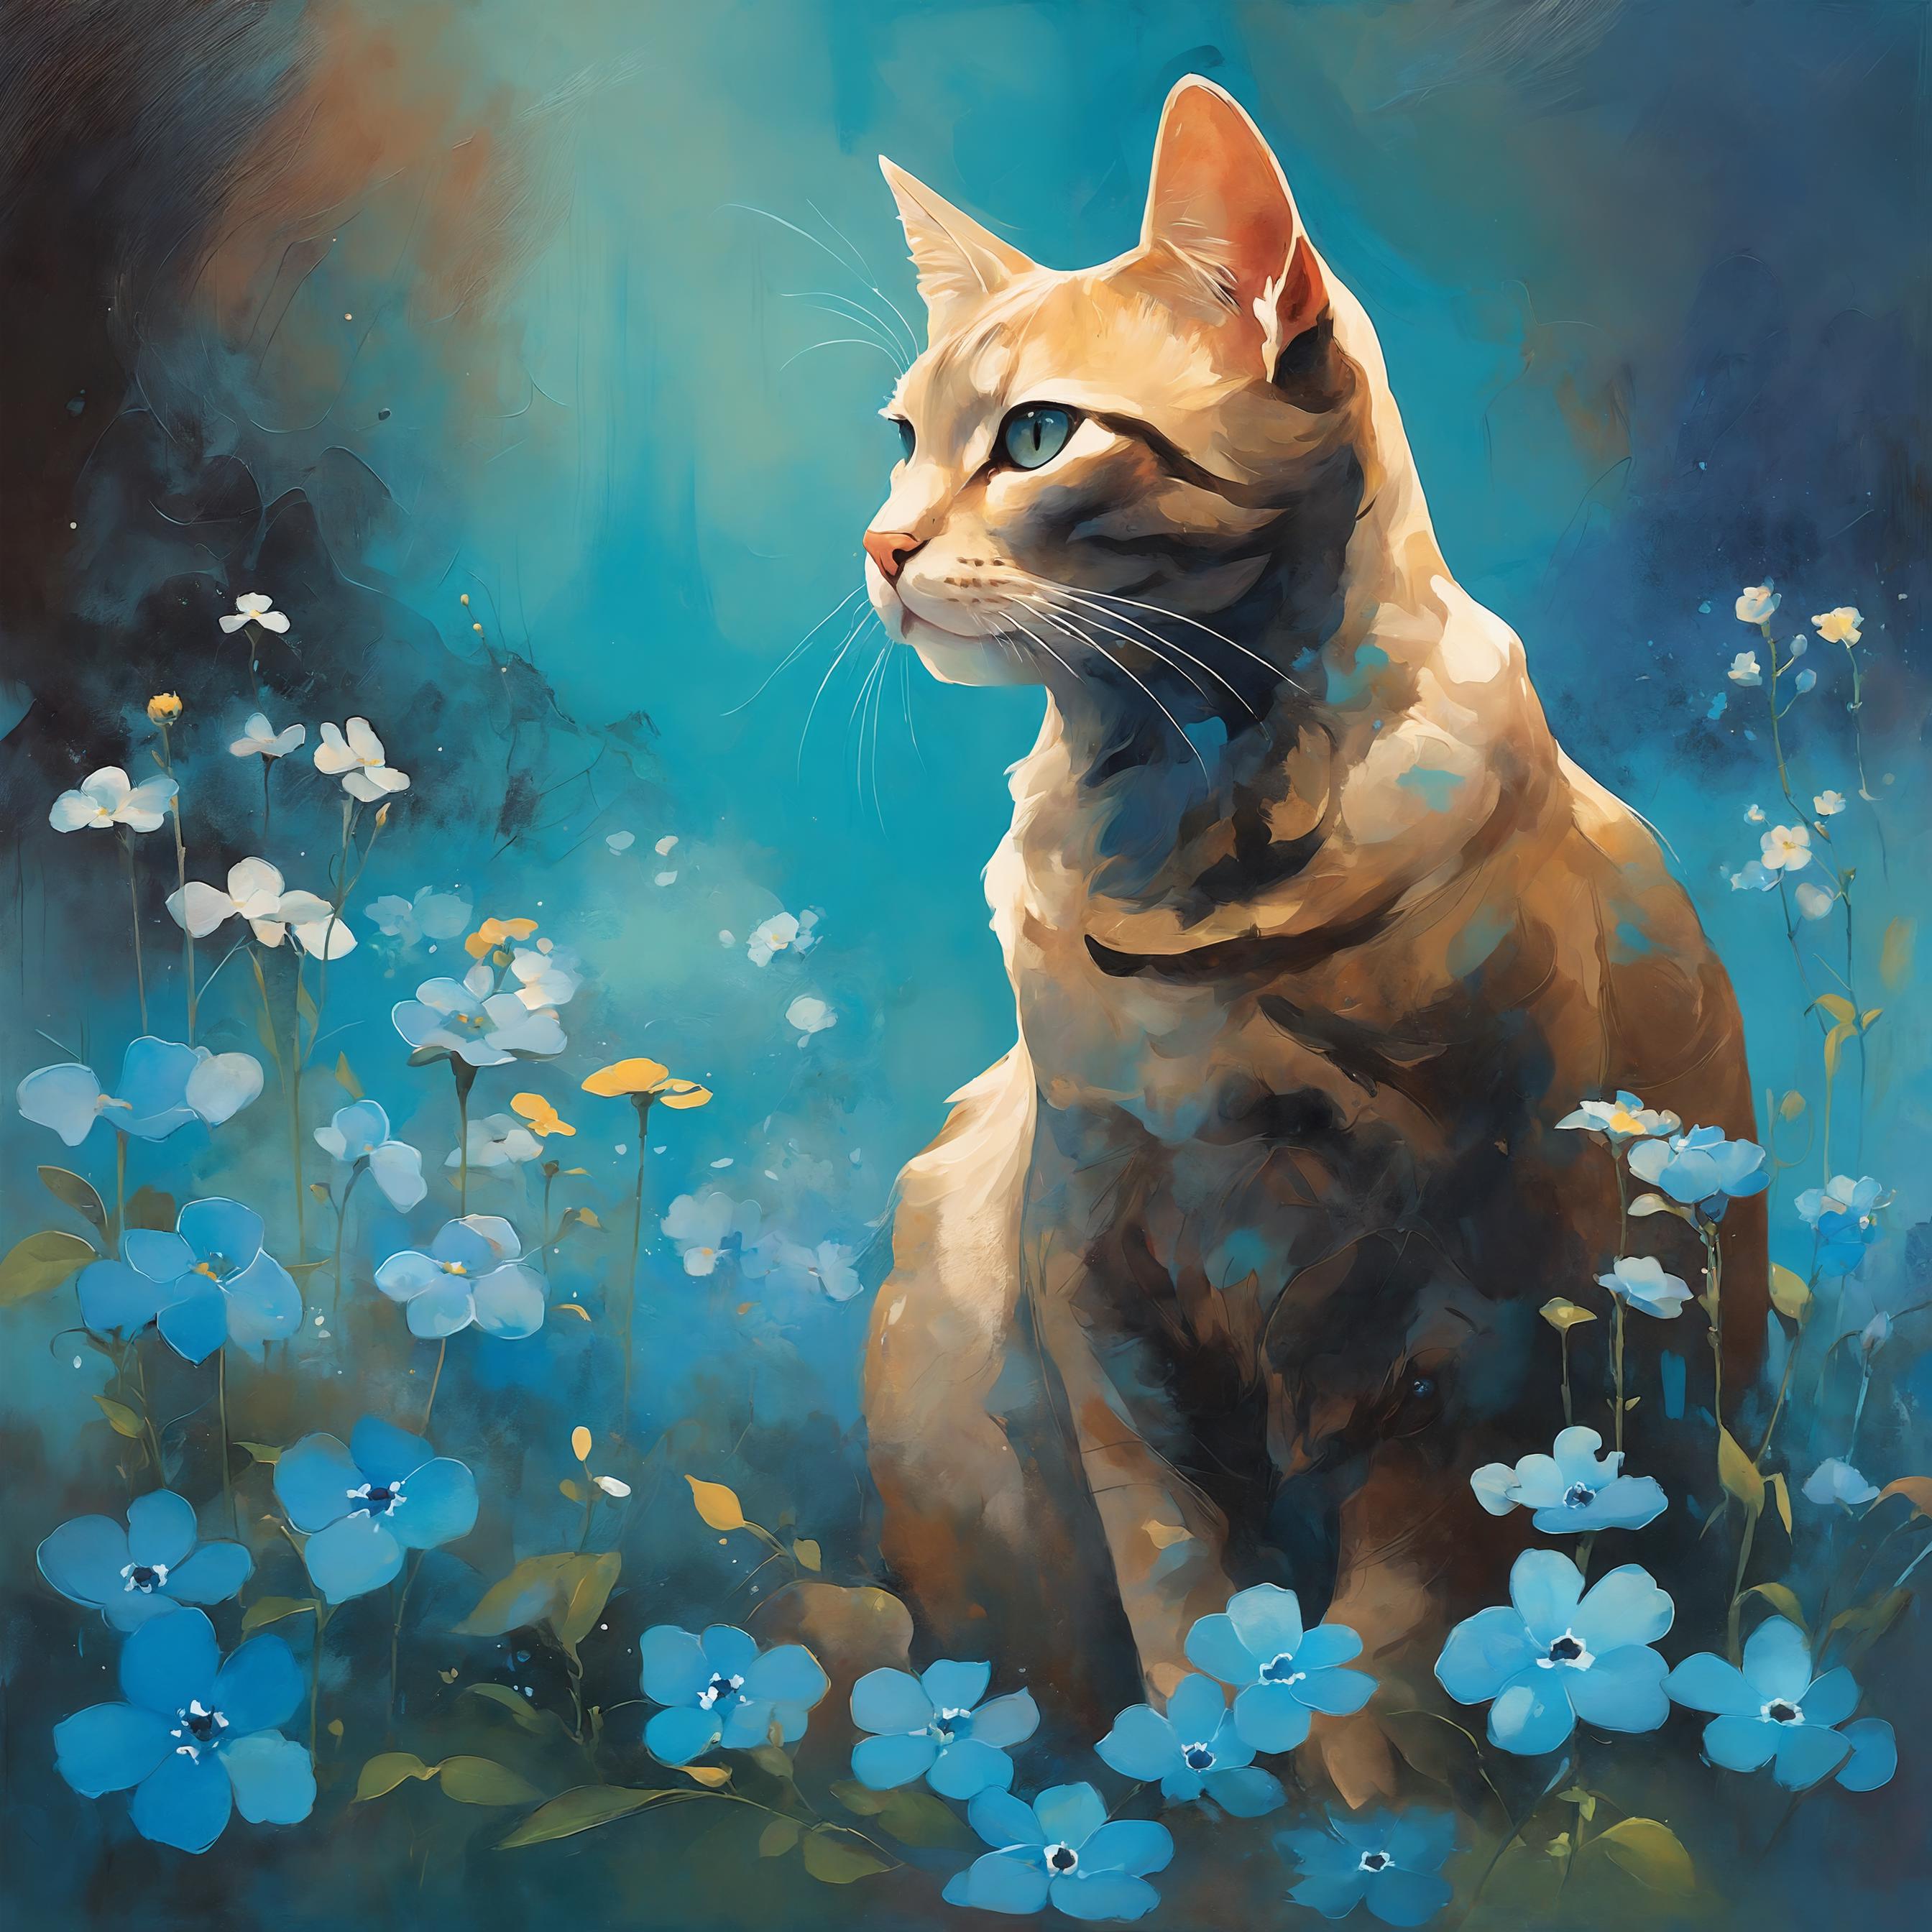 A cat sitting in a field of blue flowers.